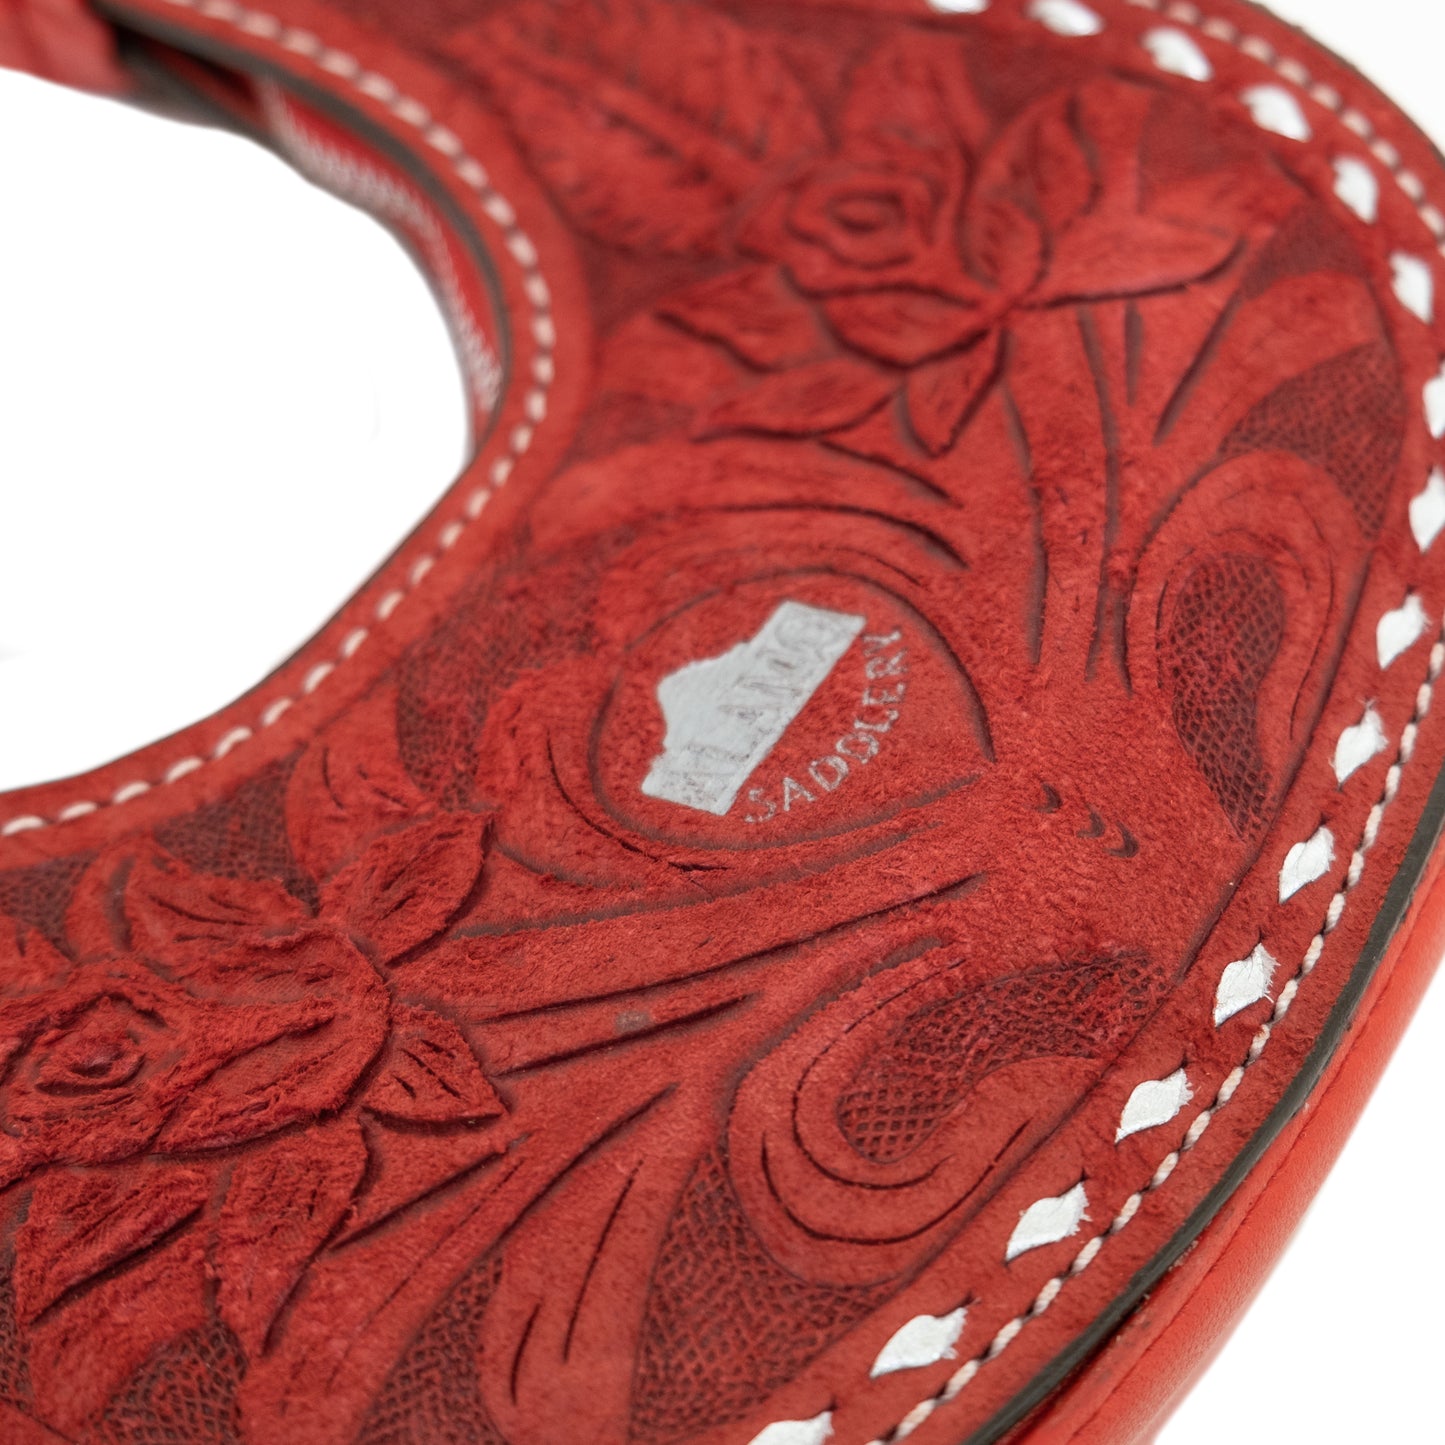 The Alamo Mini handbag red leather